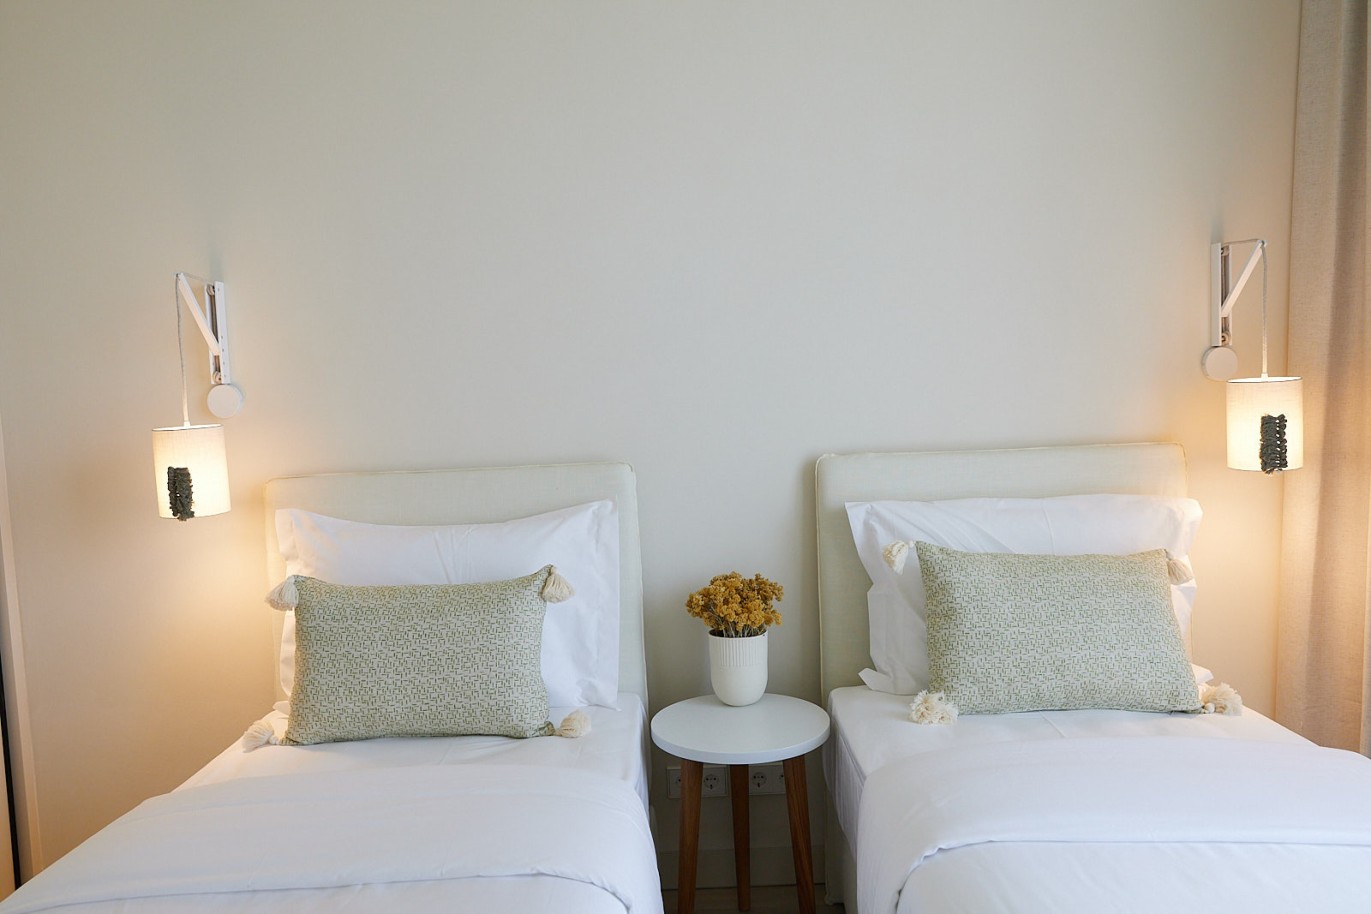 2 bedroom apartment in resort, for sale in Porches, Algarve_228786